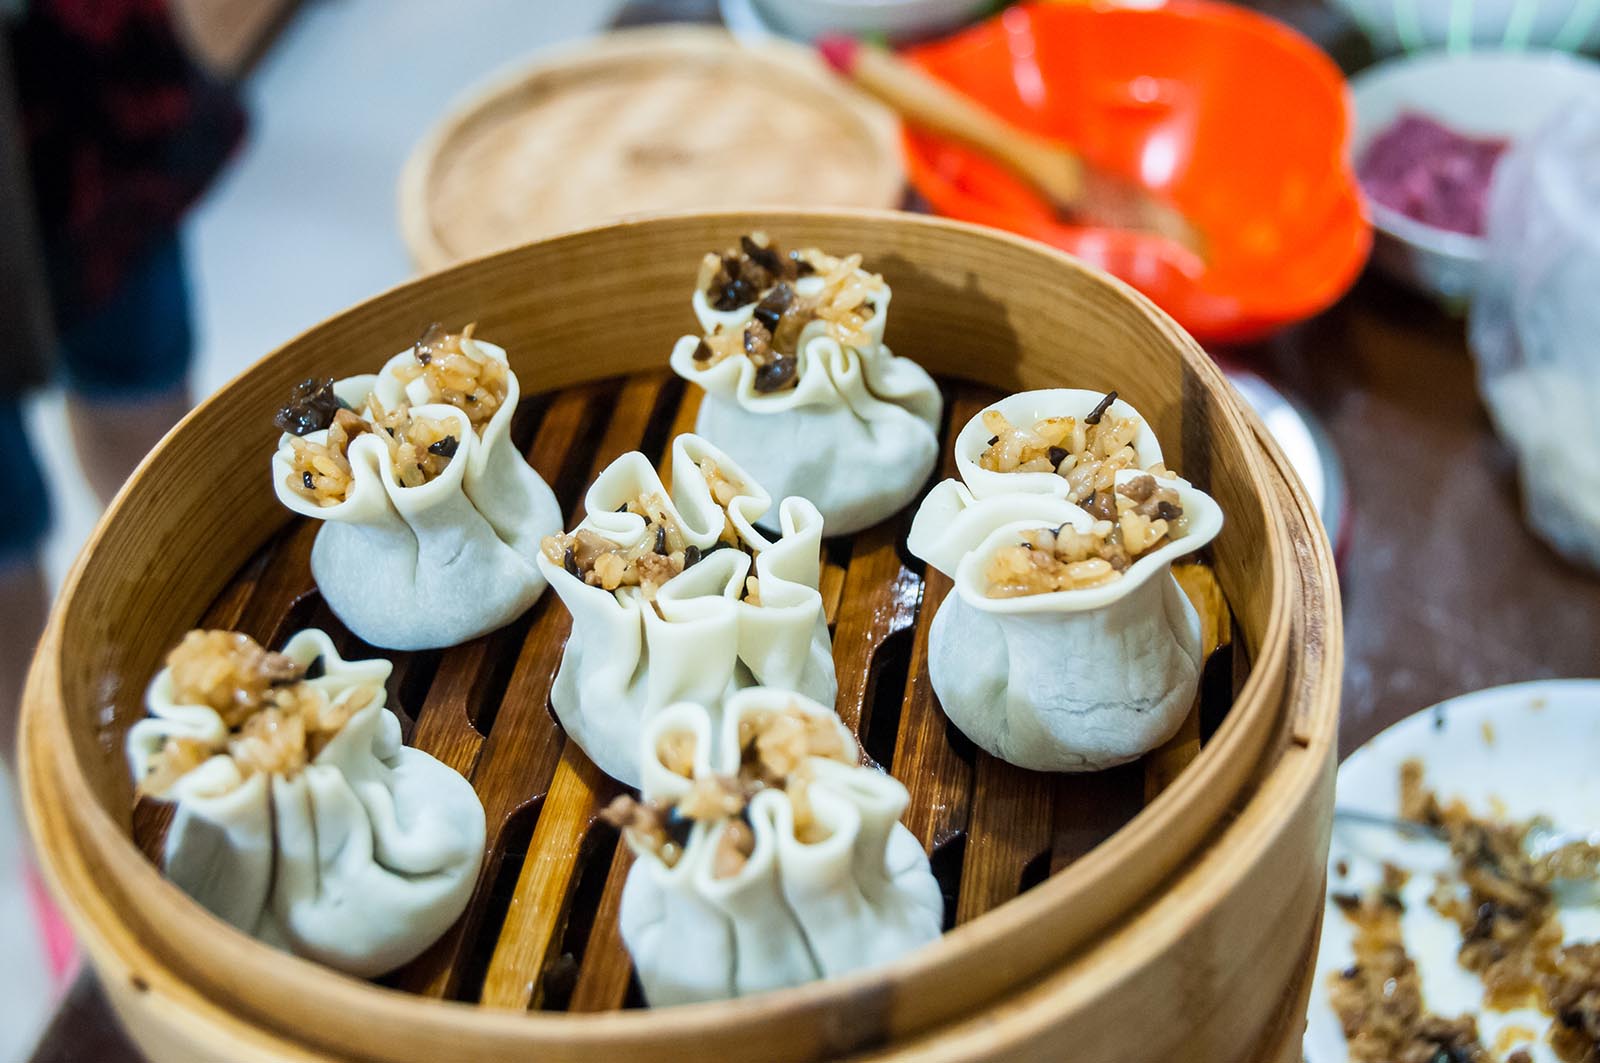 Dumplings are a staple food in Shanghai | Image by Mark Andrews